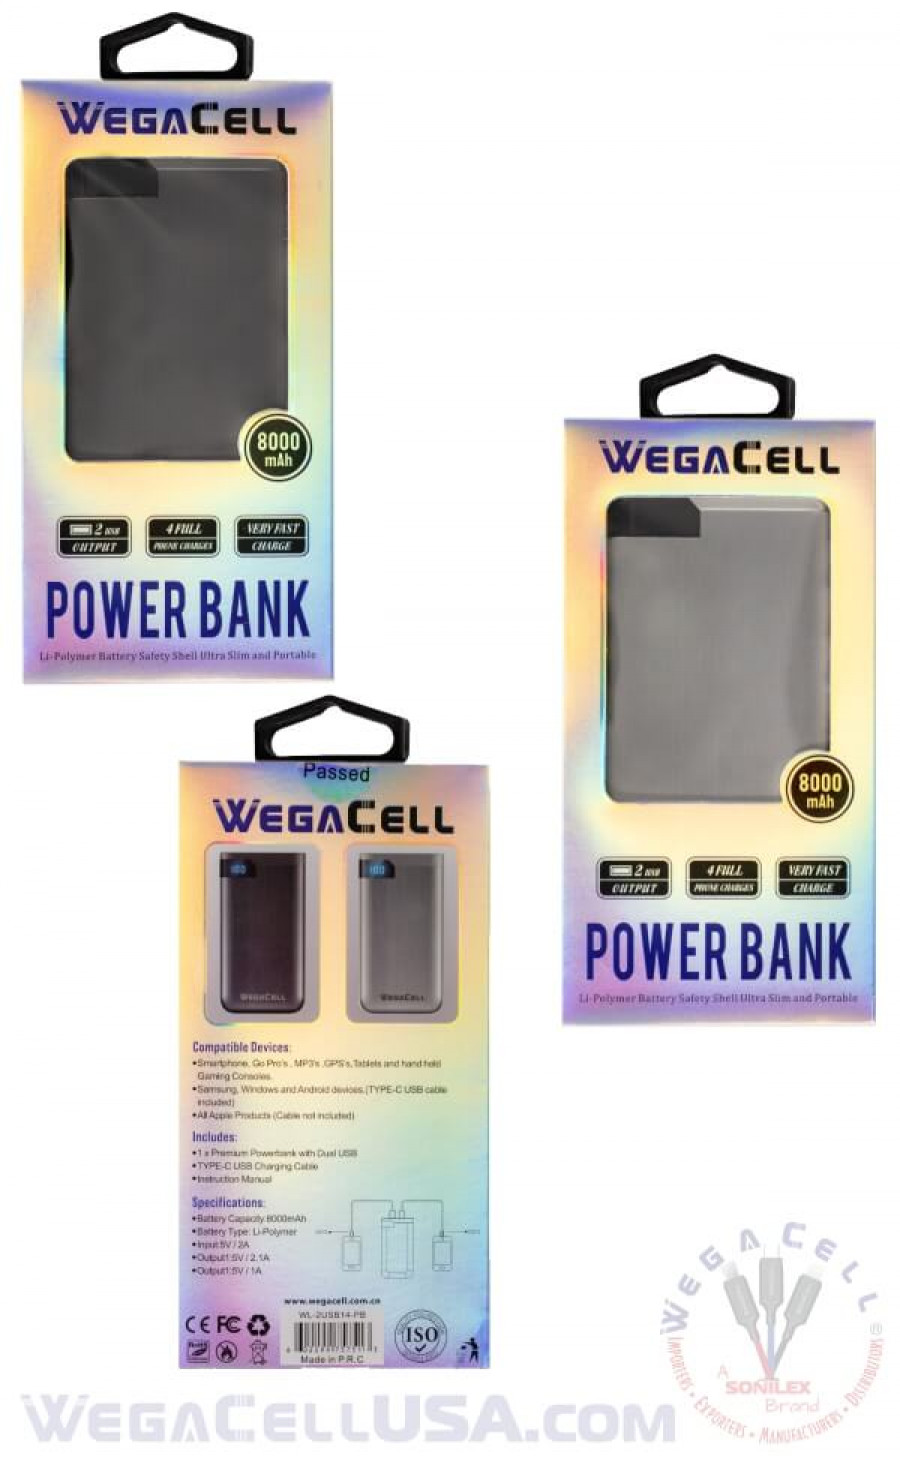 8000 mah power bank fast charging lithium-polymer portable battery pack - wholesale pkg. wegacell: wl-2usb14-pb powerbank 26